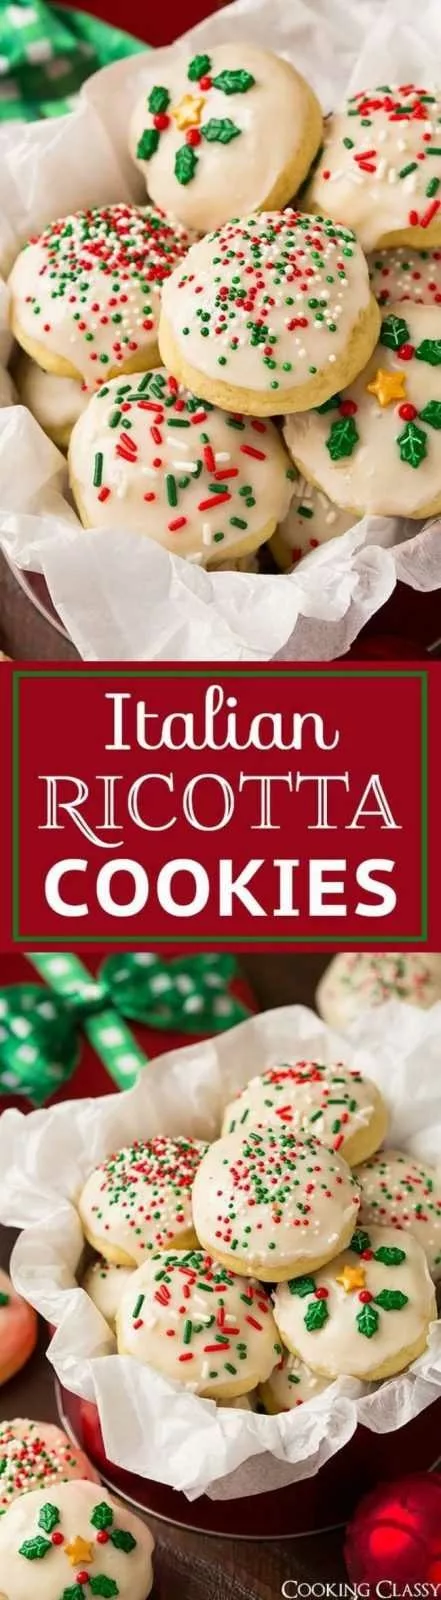 20 Delicious Italian Recipes